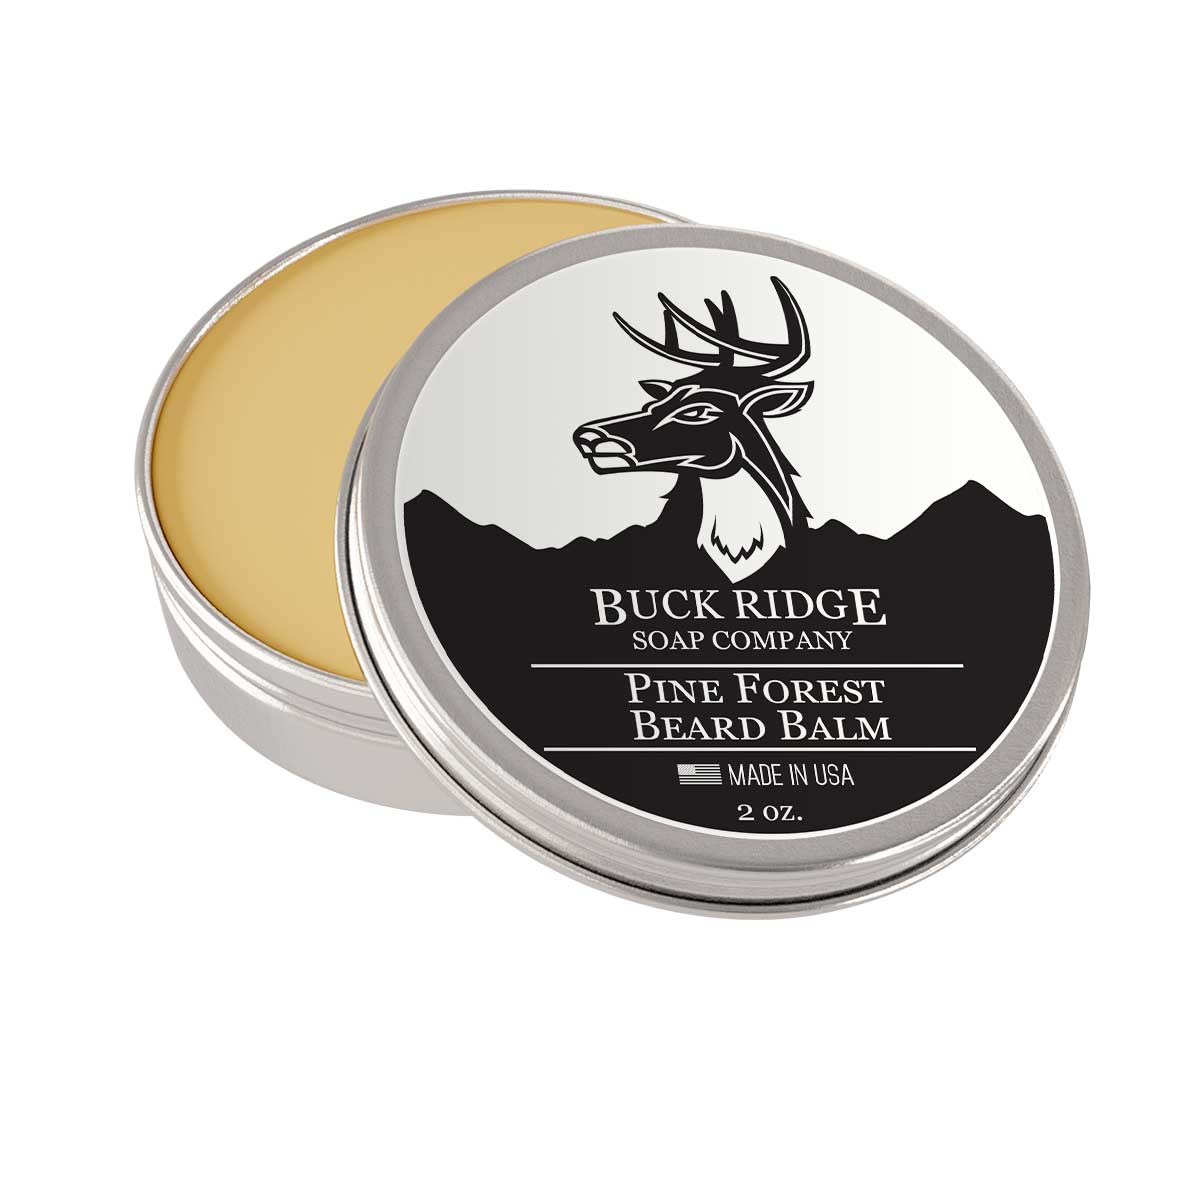 Pine Forest Beard Balm - Buck Ridge Soap